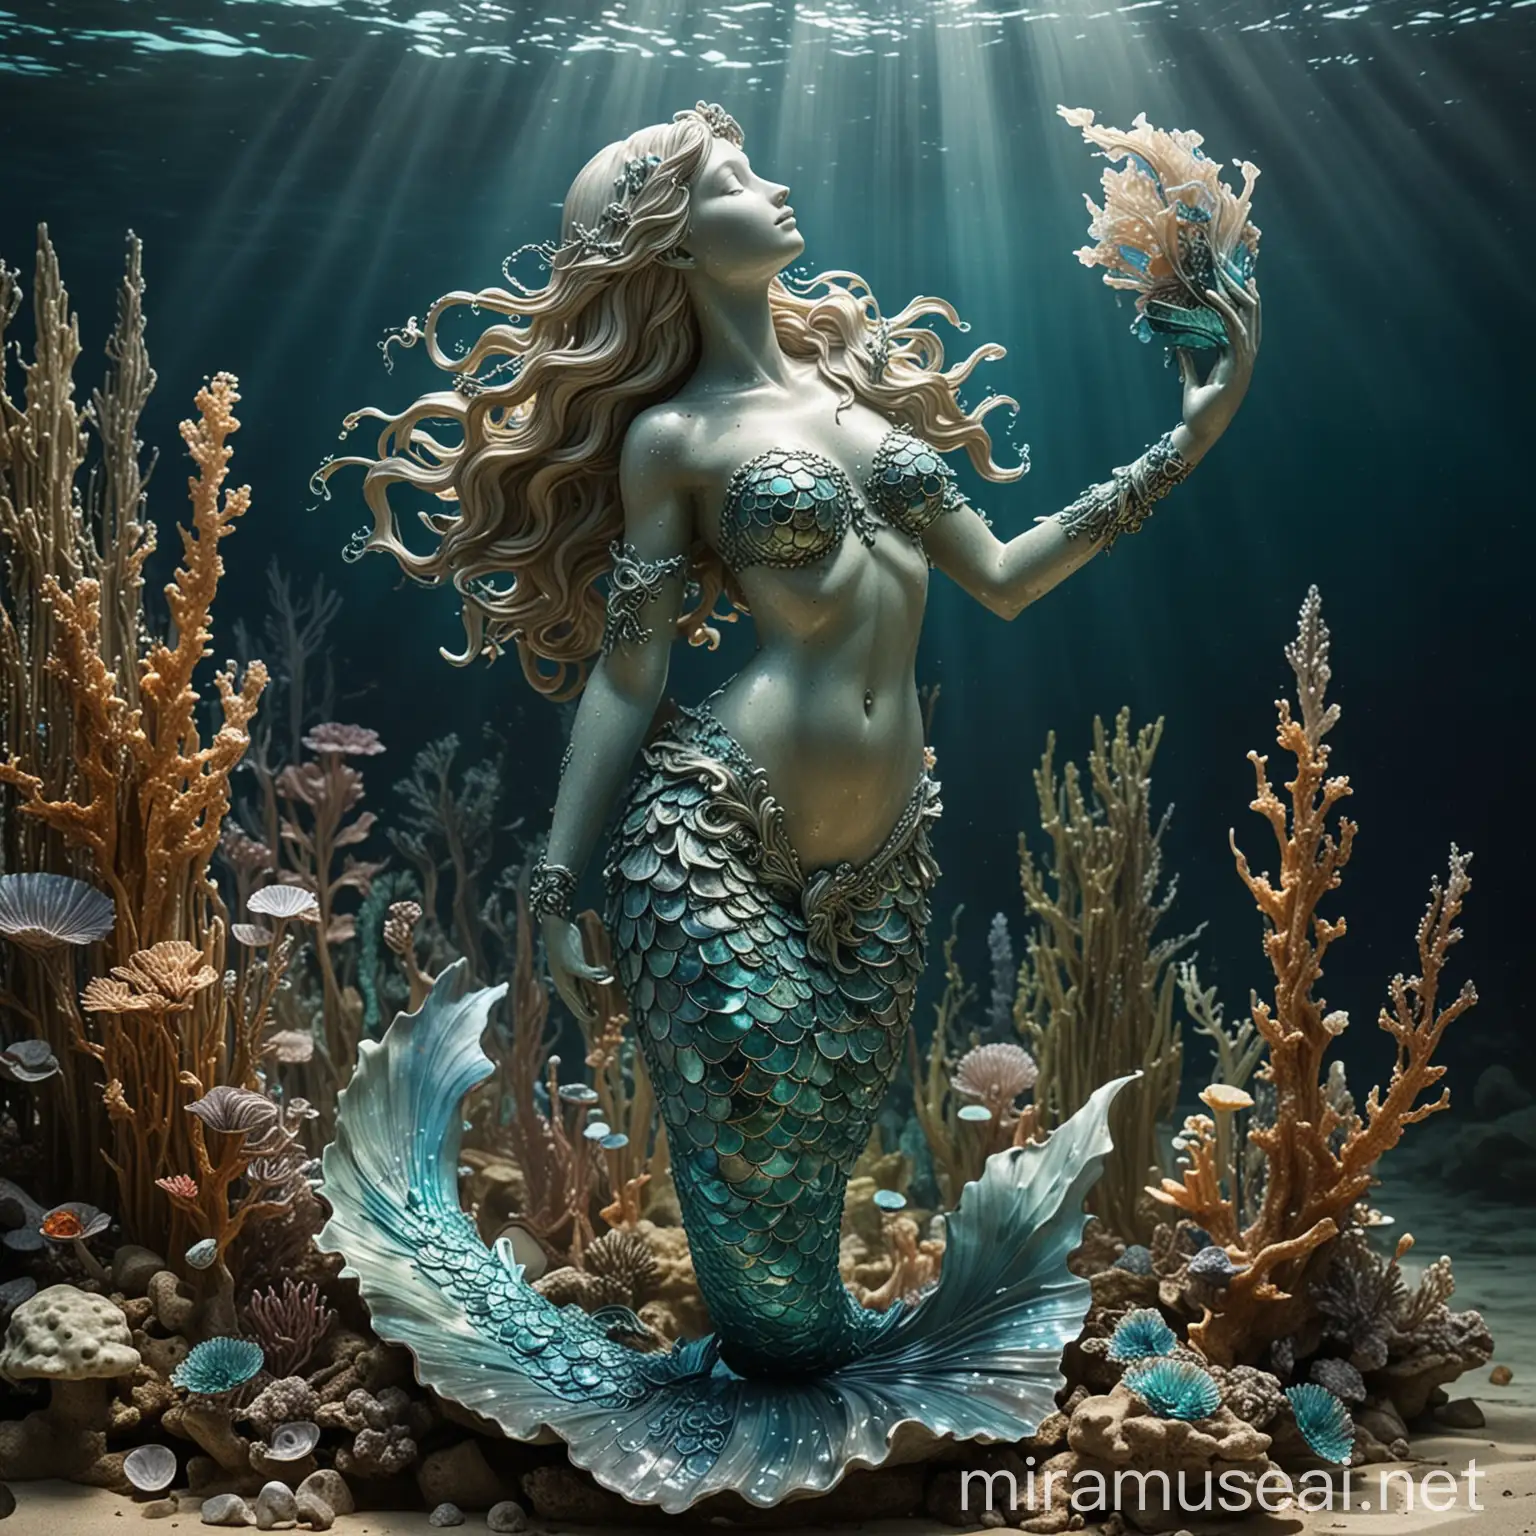 Majestic Mermaid Statue Amidst Vibrant Coral Reef